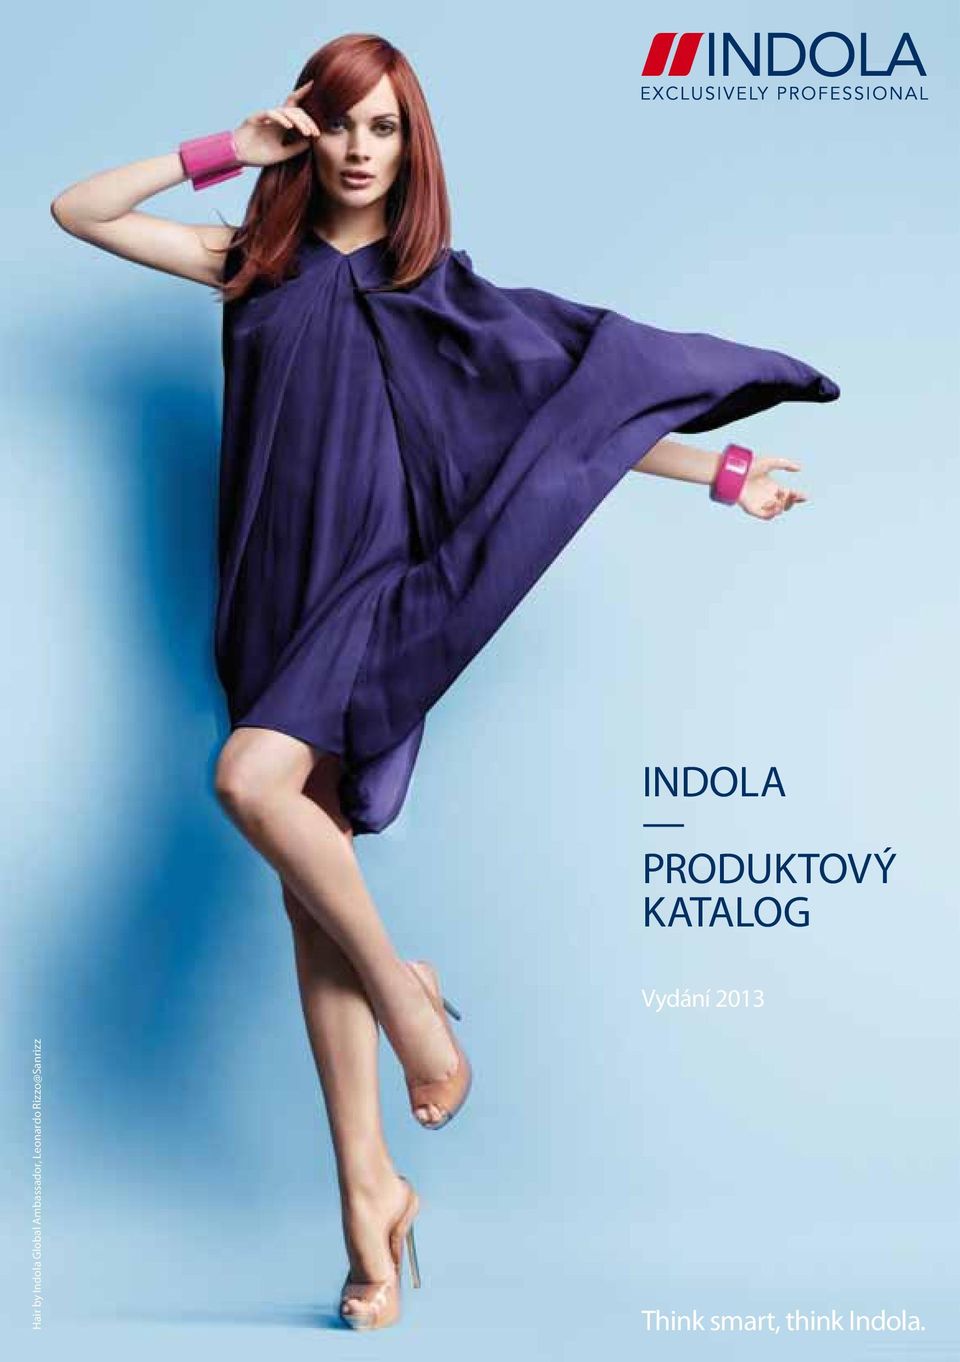 Hair by Indola Global